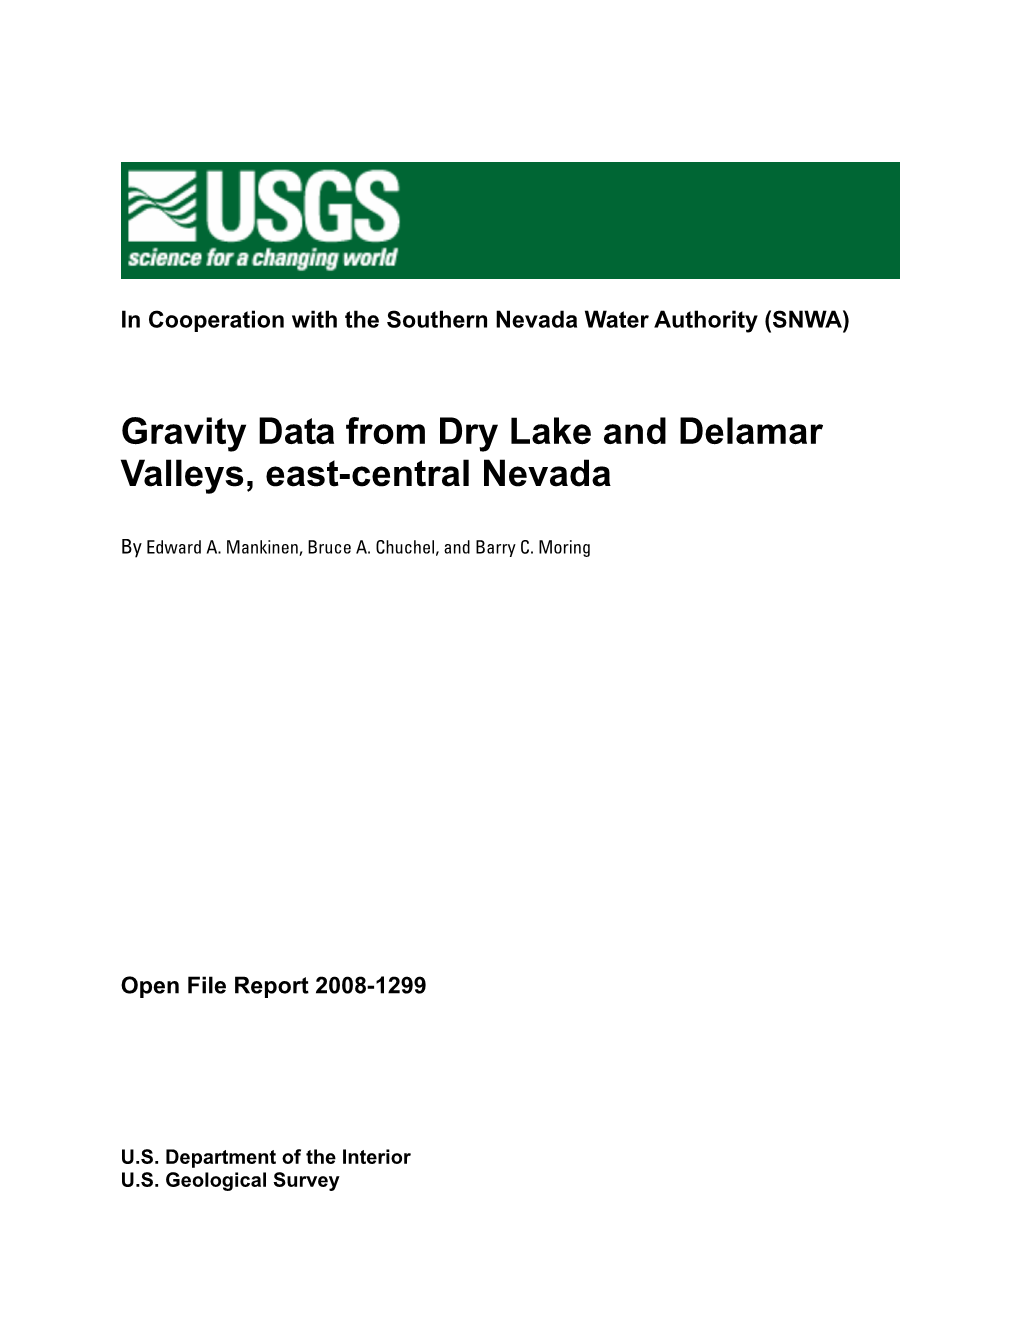 USGS Open File Report 2008-1299